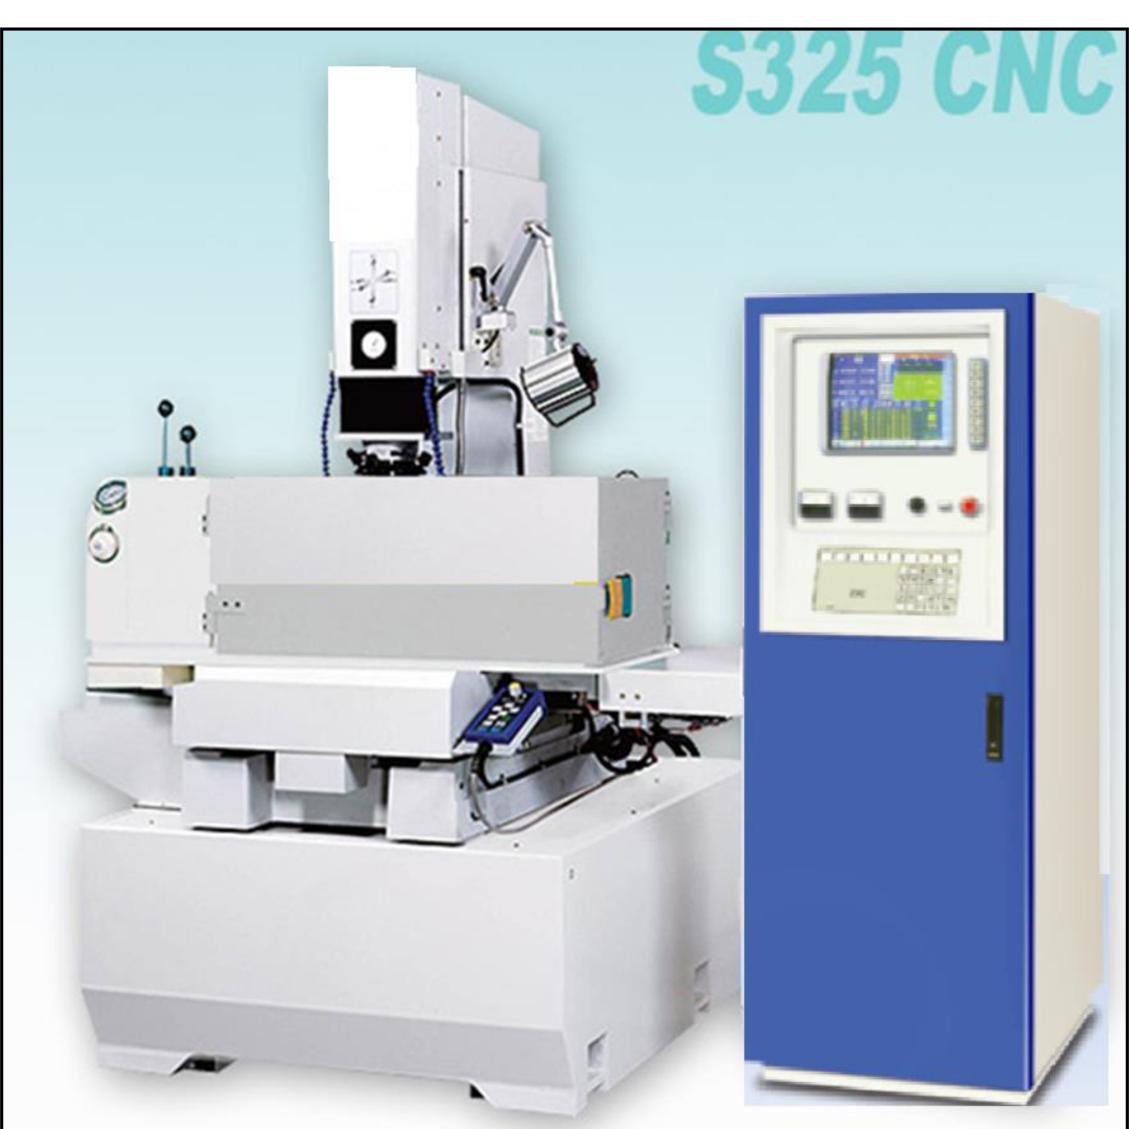 S325 CNC Series -S325 CNC